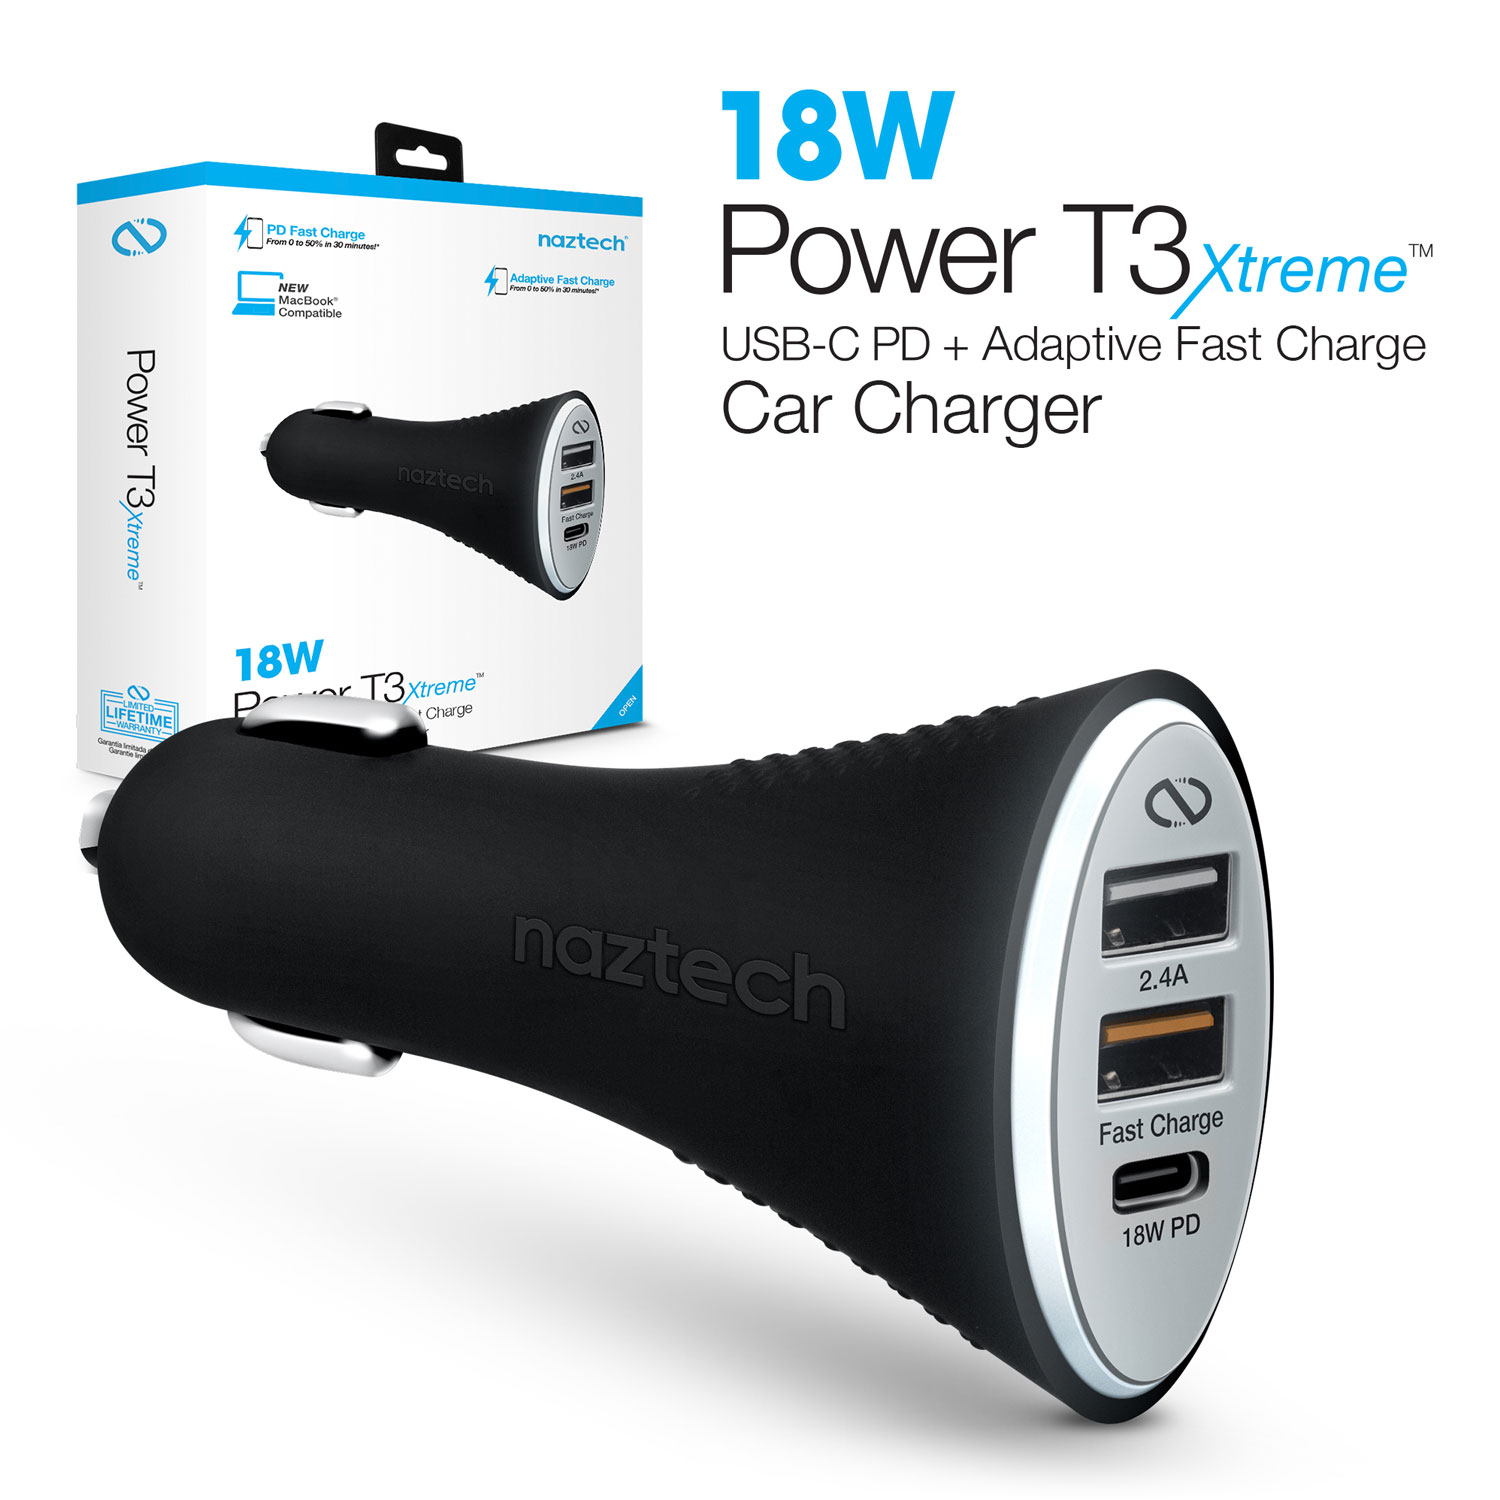 Naztech Power T3 Xtreme 18W USB-C PD+AFC+2.4A Car Charger